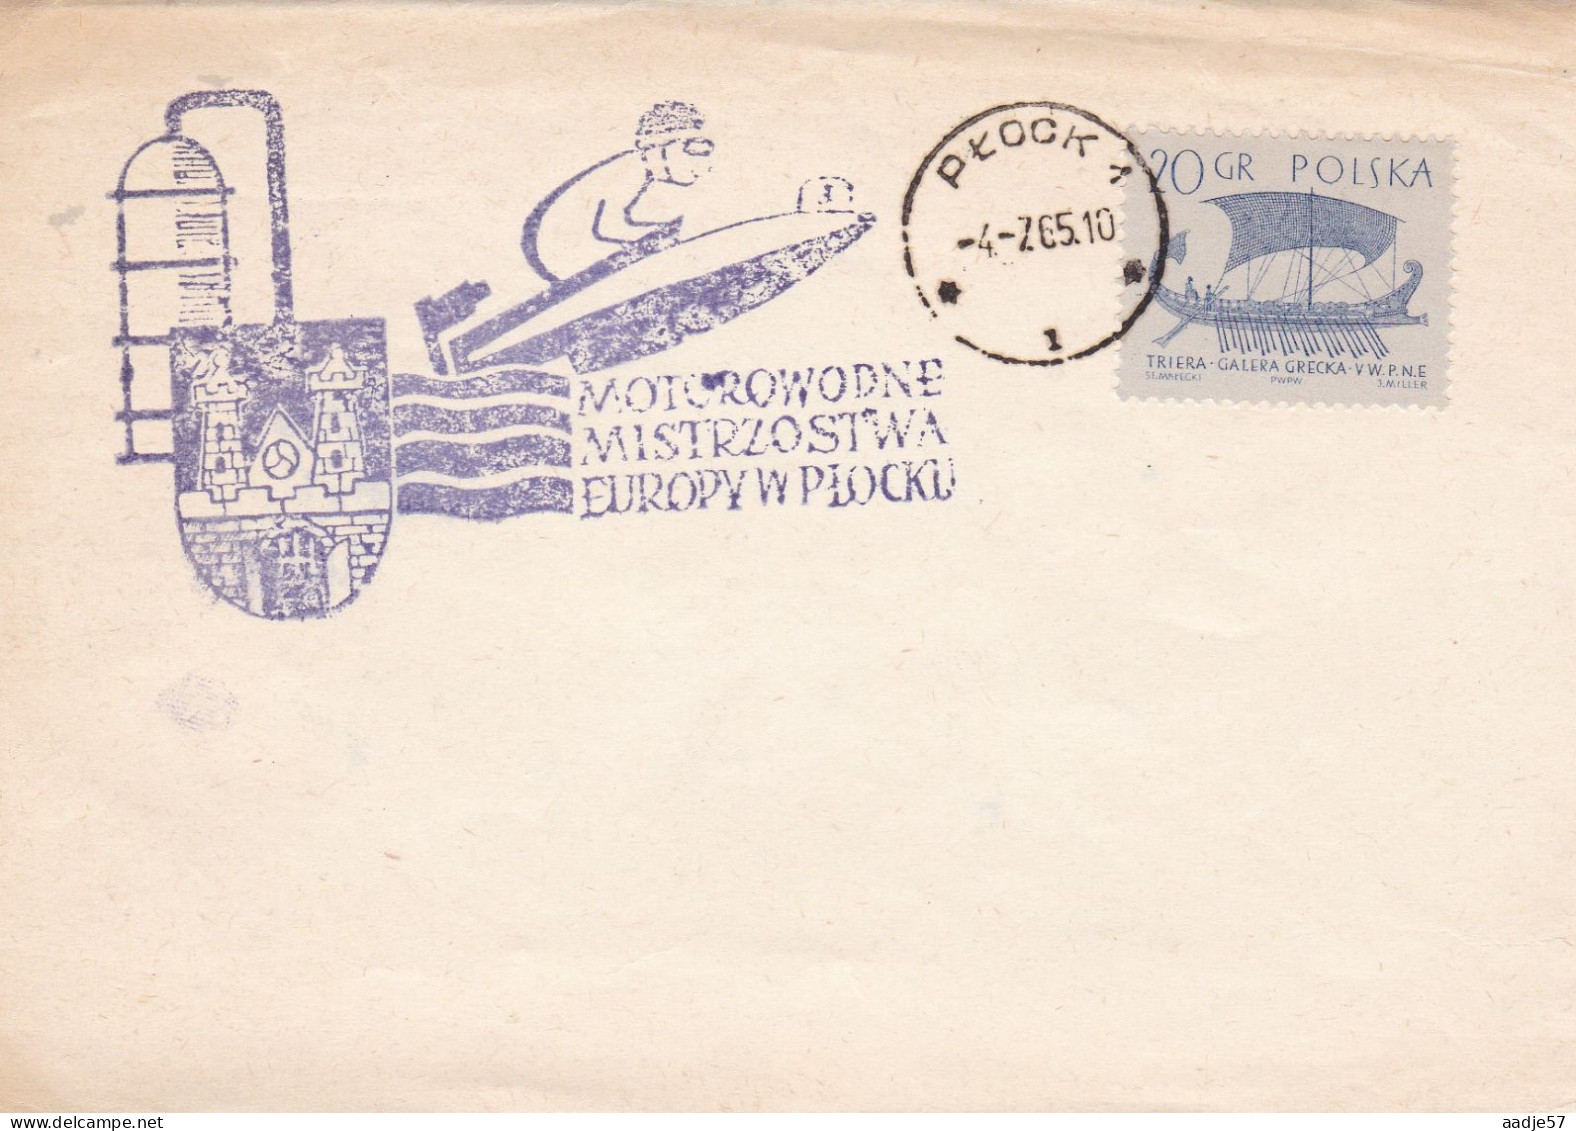 POLAND FDC POLOGNE 1965 Motorowodne Mistrzostwa Europa Ptock - Lettres & Documents